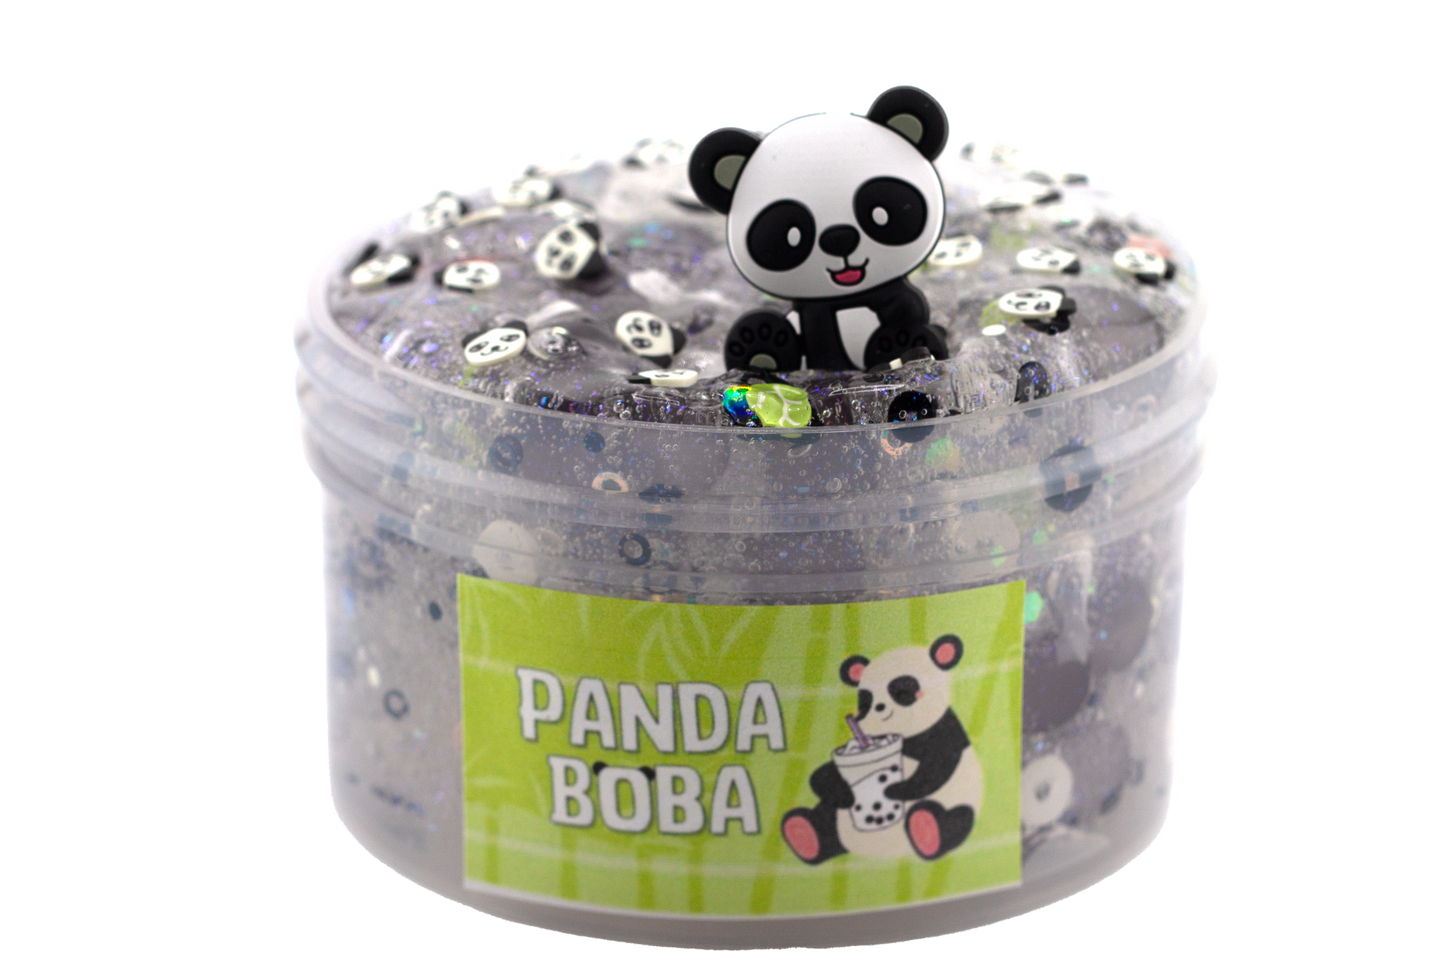 Panda Boba